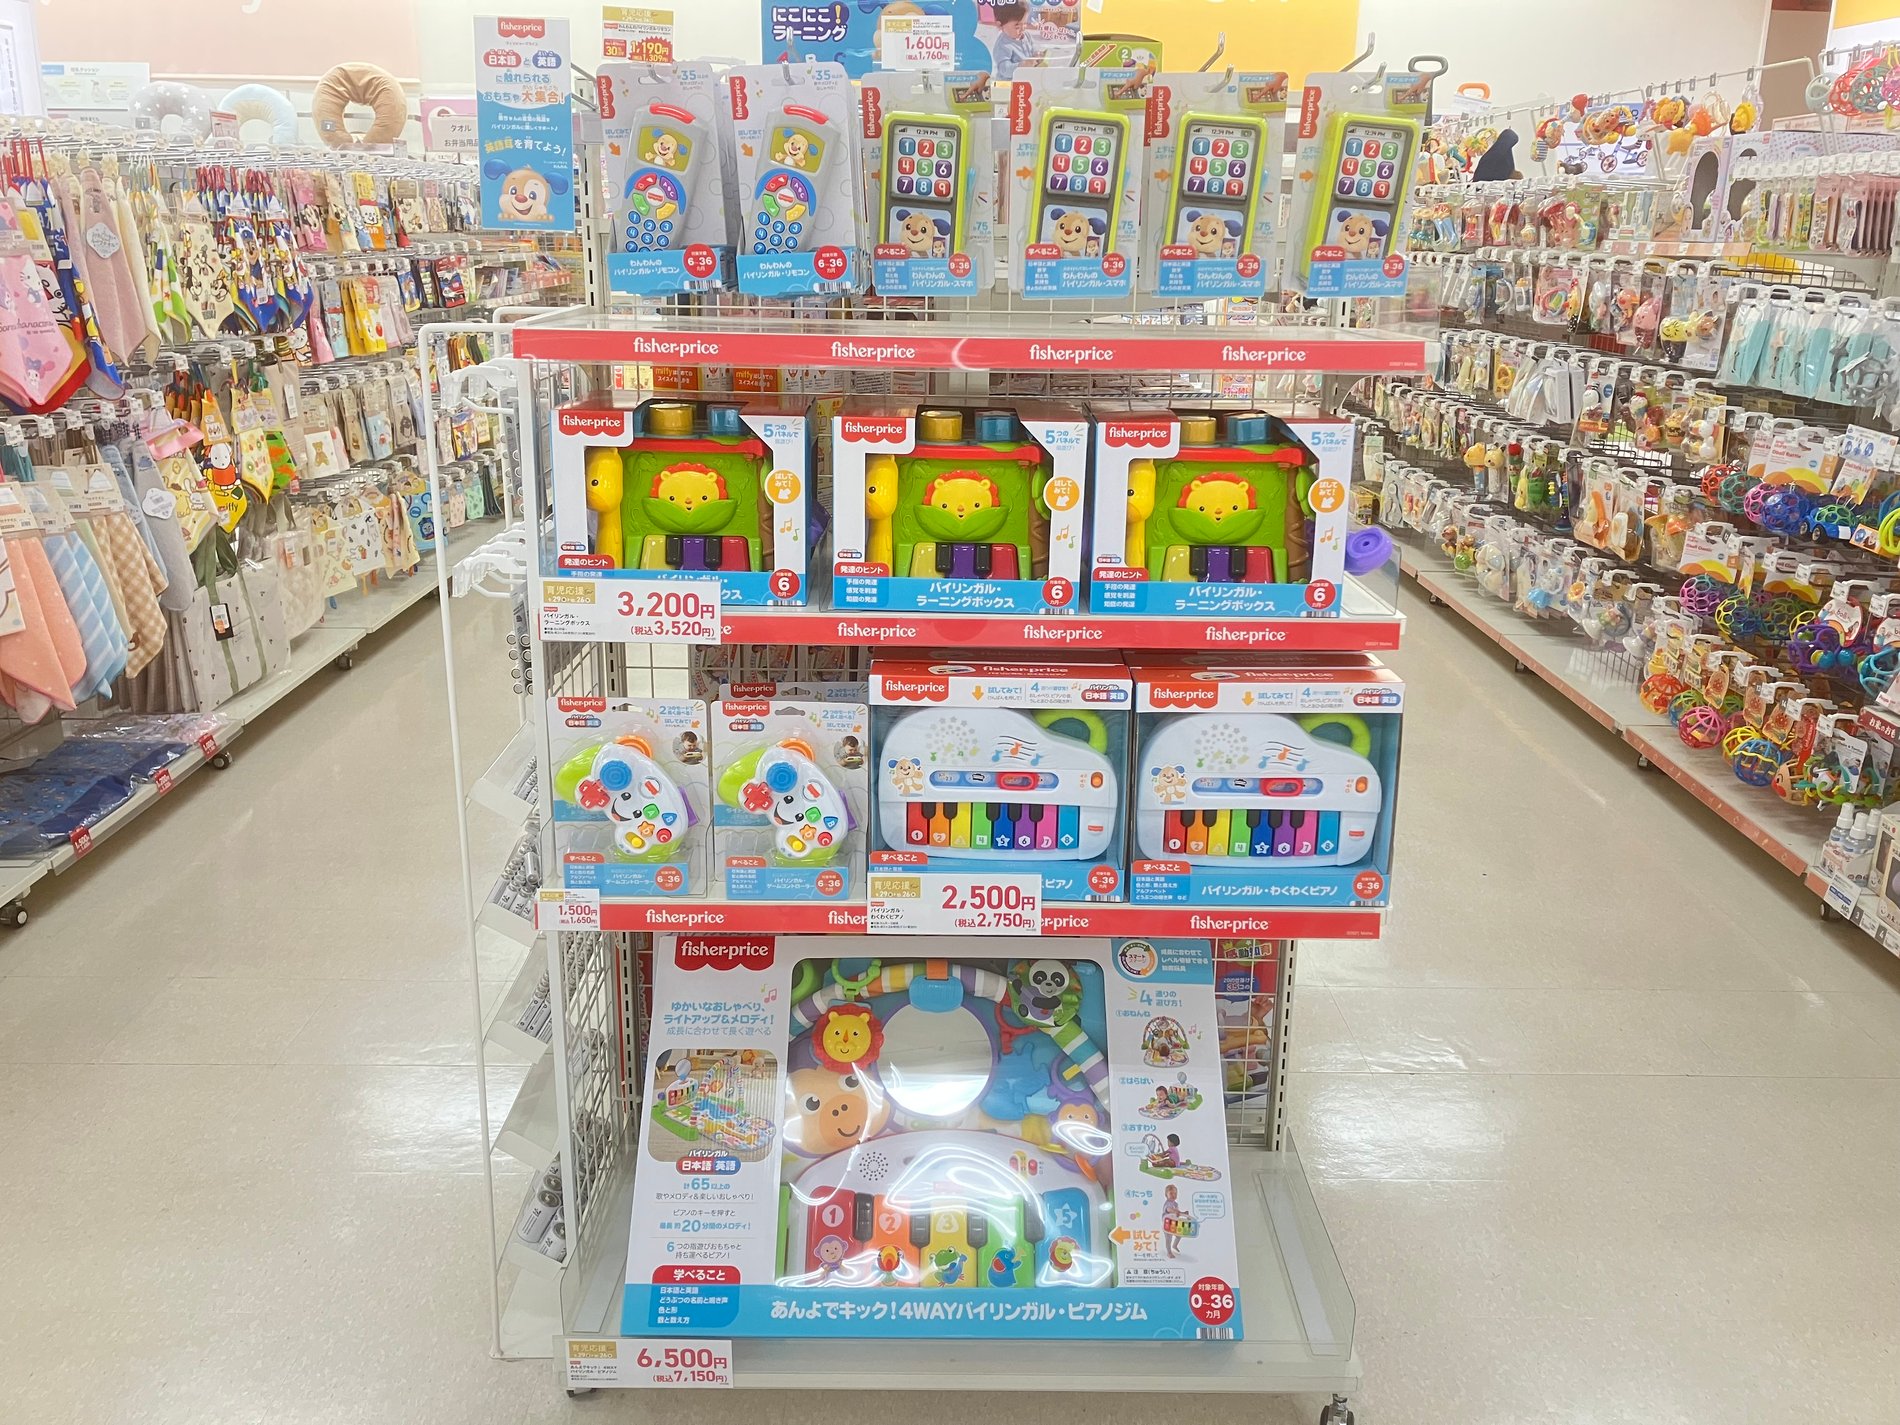 fisher-price
日本語と英語に触れられるおもちゃ集めました